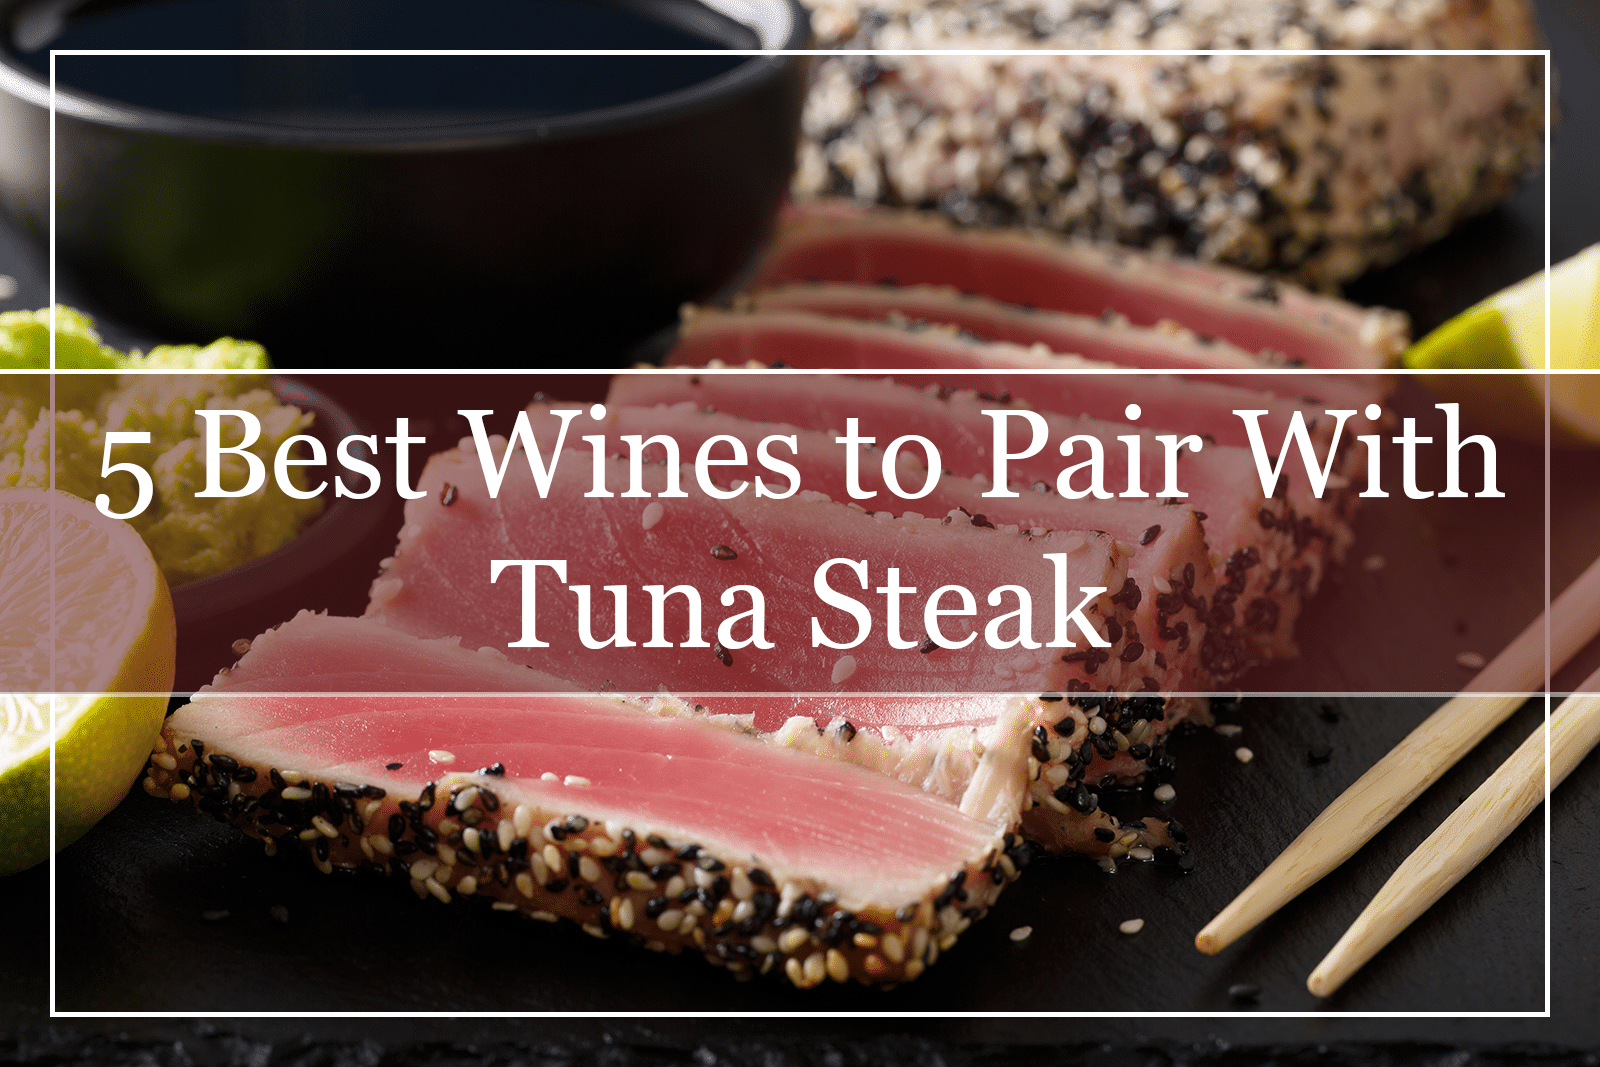 5 Best Wines to Pair With Tuna Steak (2021)